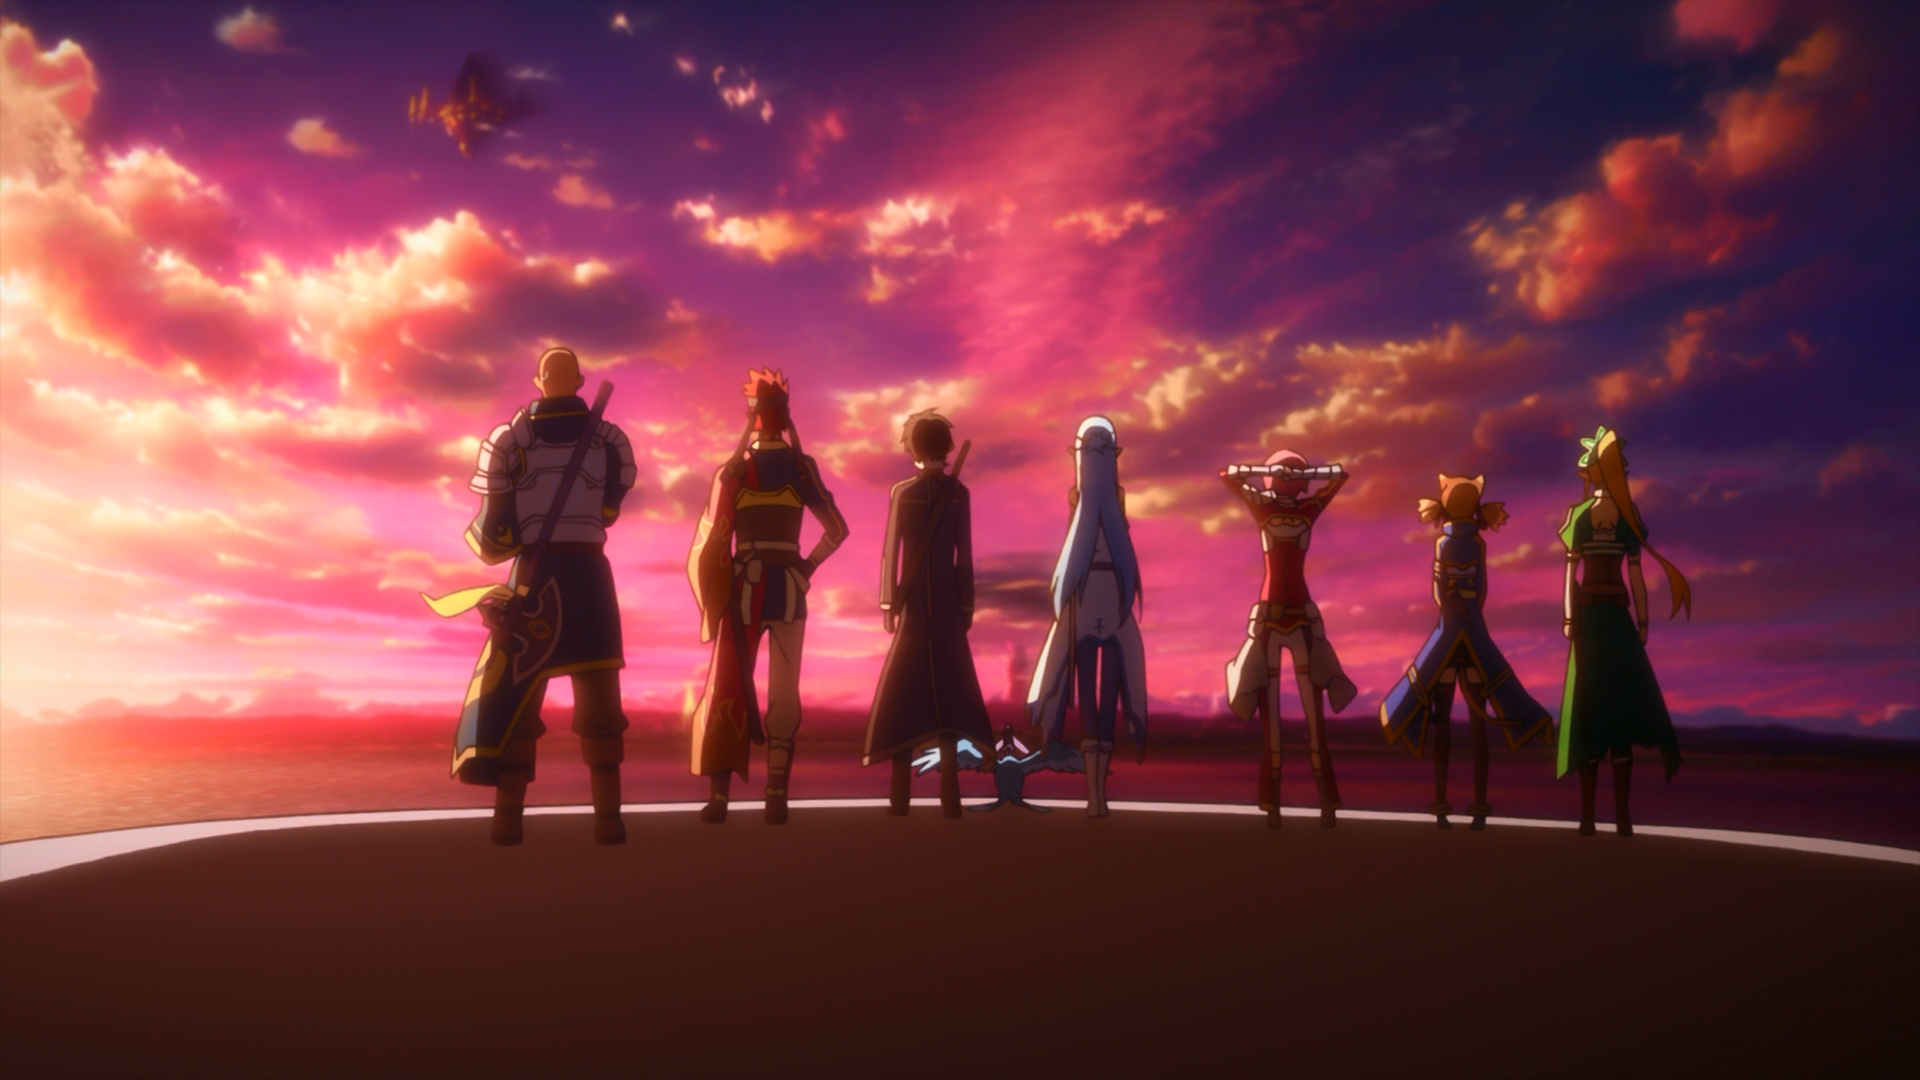 Sword Art Online Season 2 - watch episodes streaming online